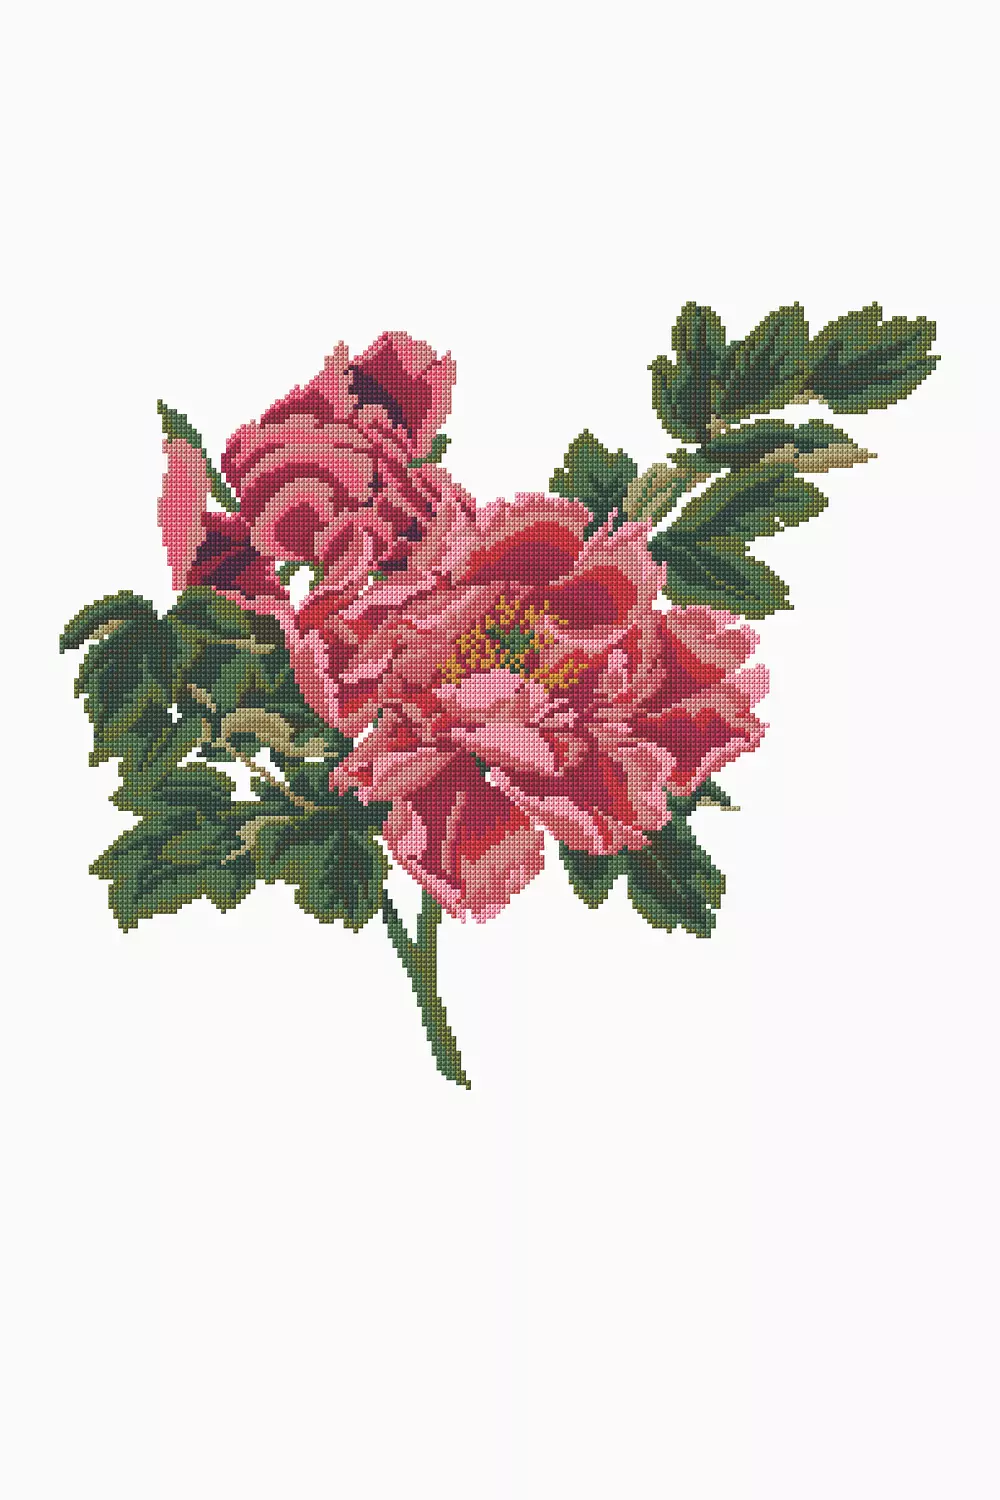 The Ornamental Rose Cross Stitch Pattern - DMC